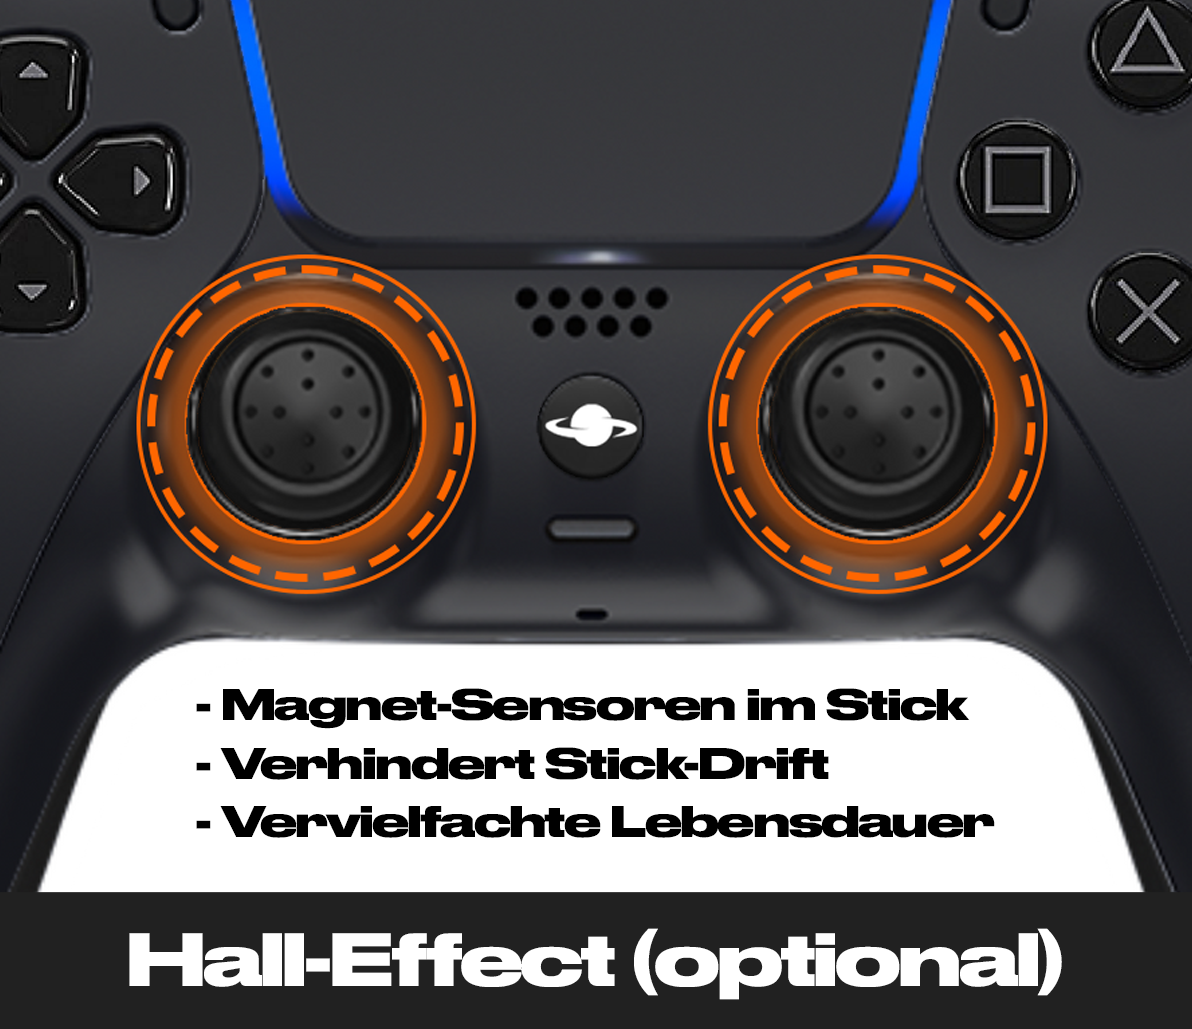 PS5 Custom Controller 'Surreal Lava'